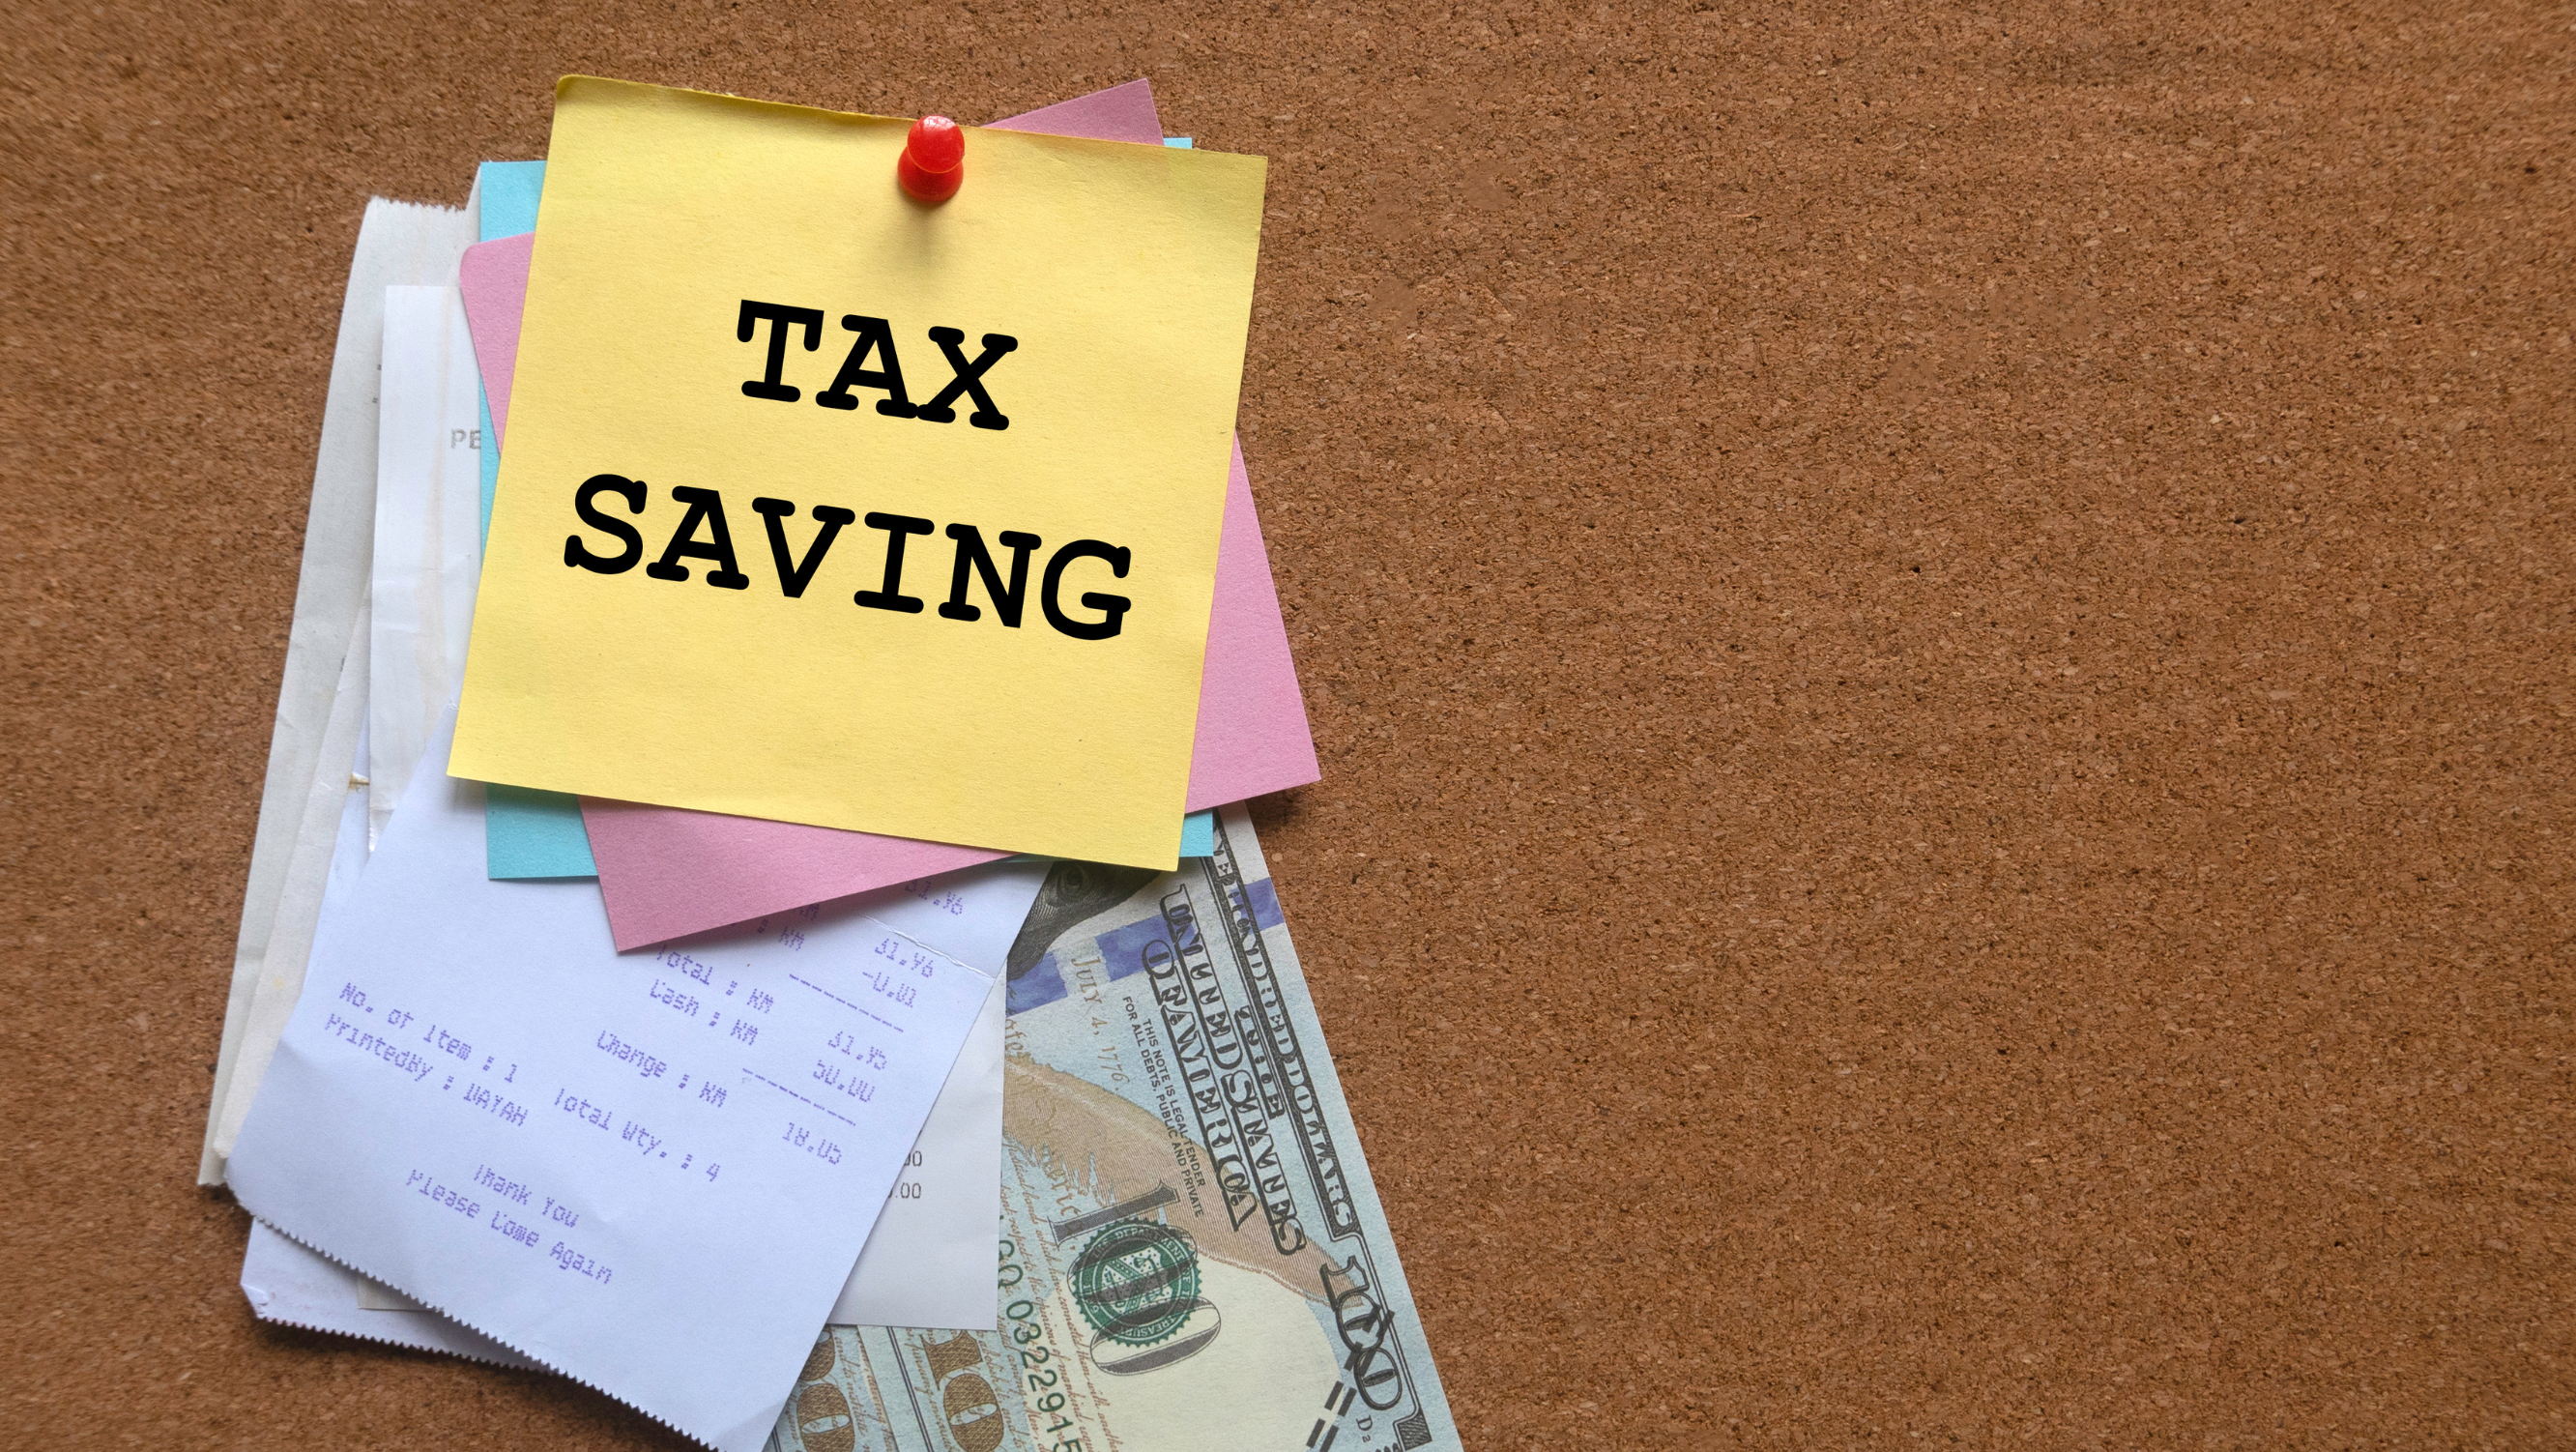 Tax Saving Image